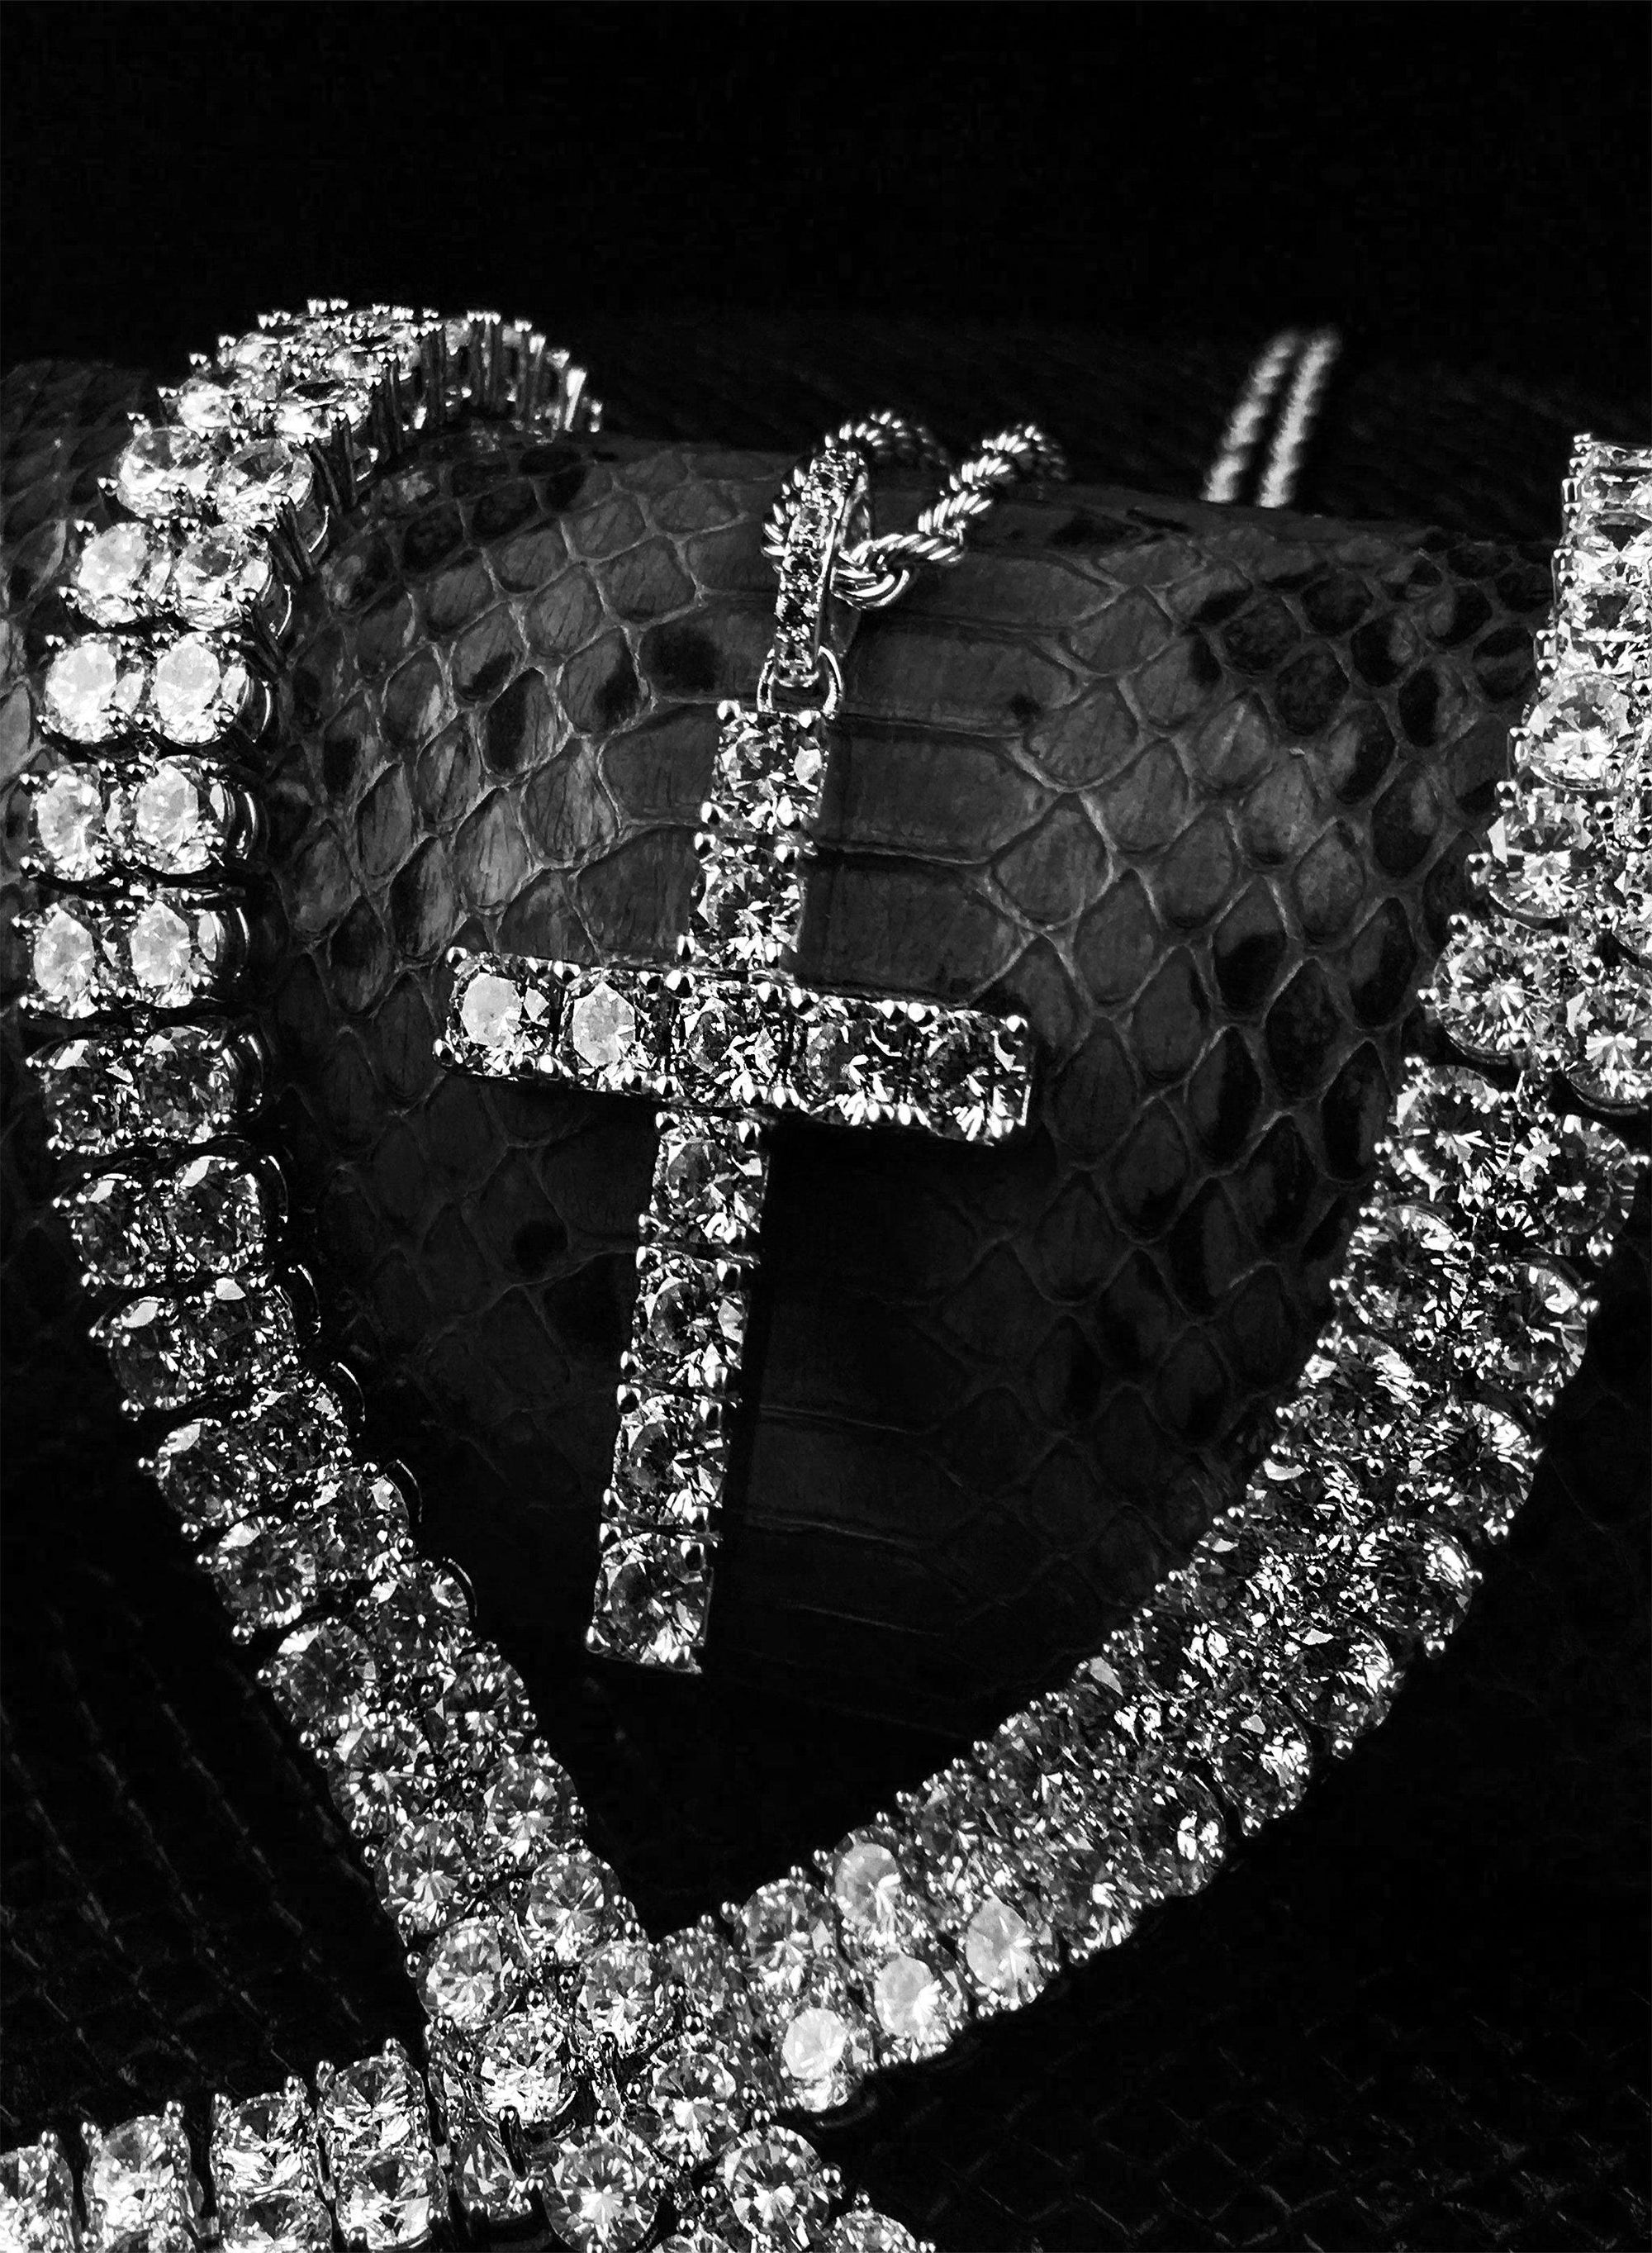 Necklace - Diamond Cross X White Gold